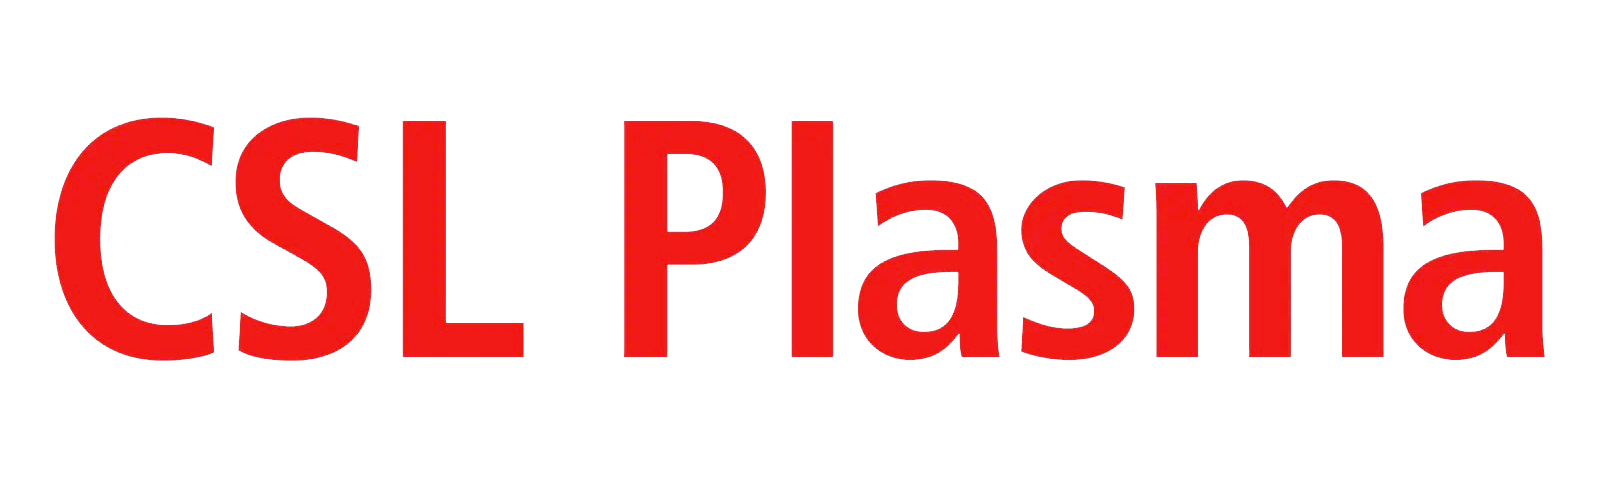 CSL Plasma Logo Footer